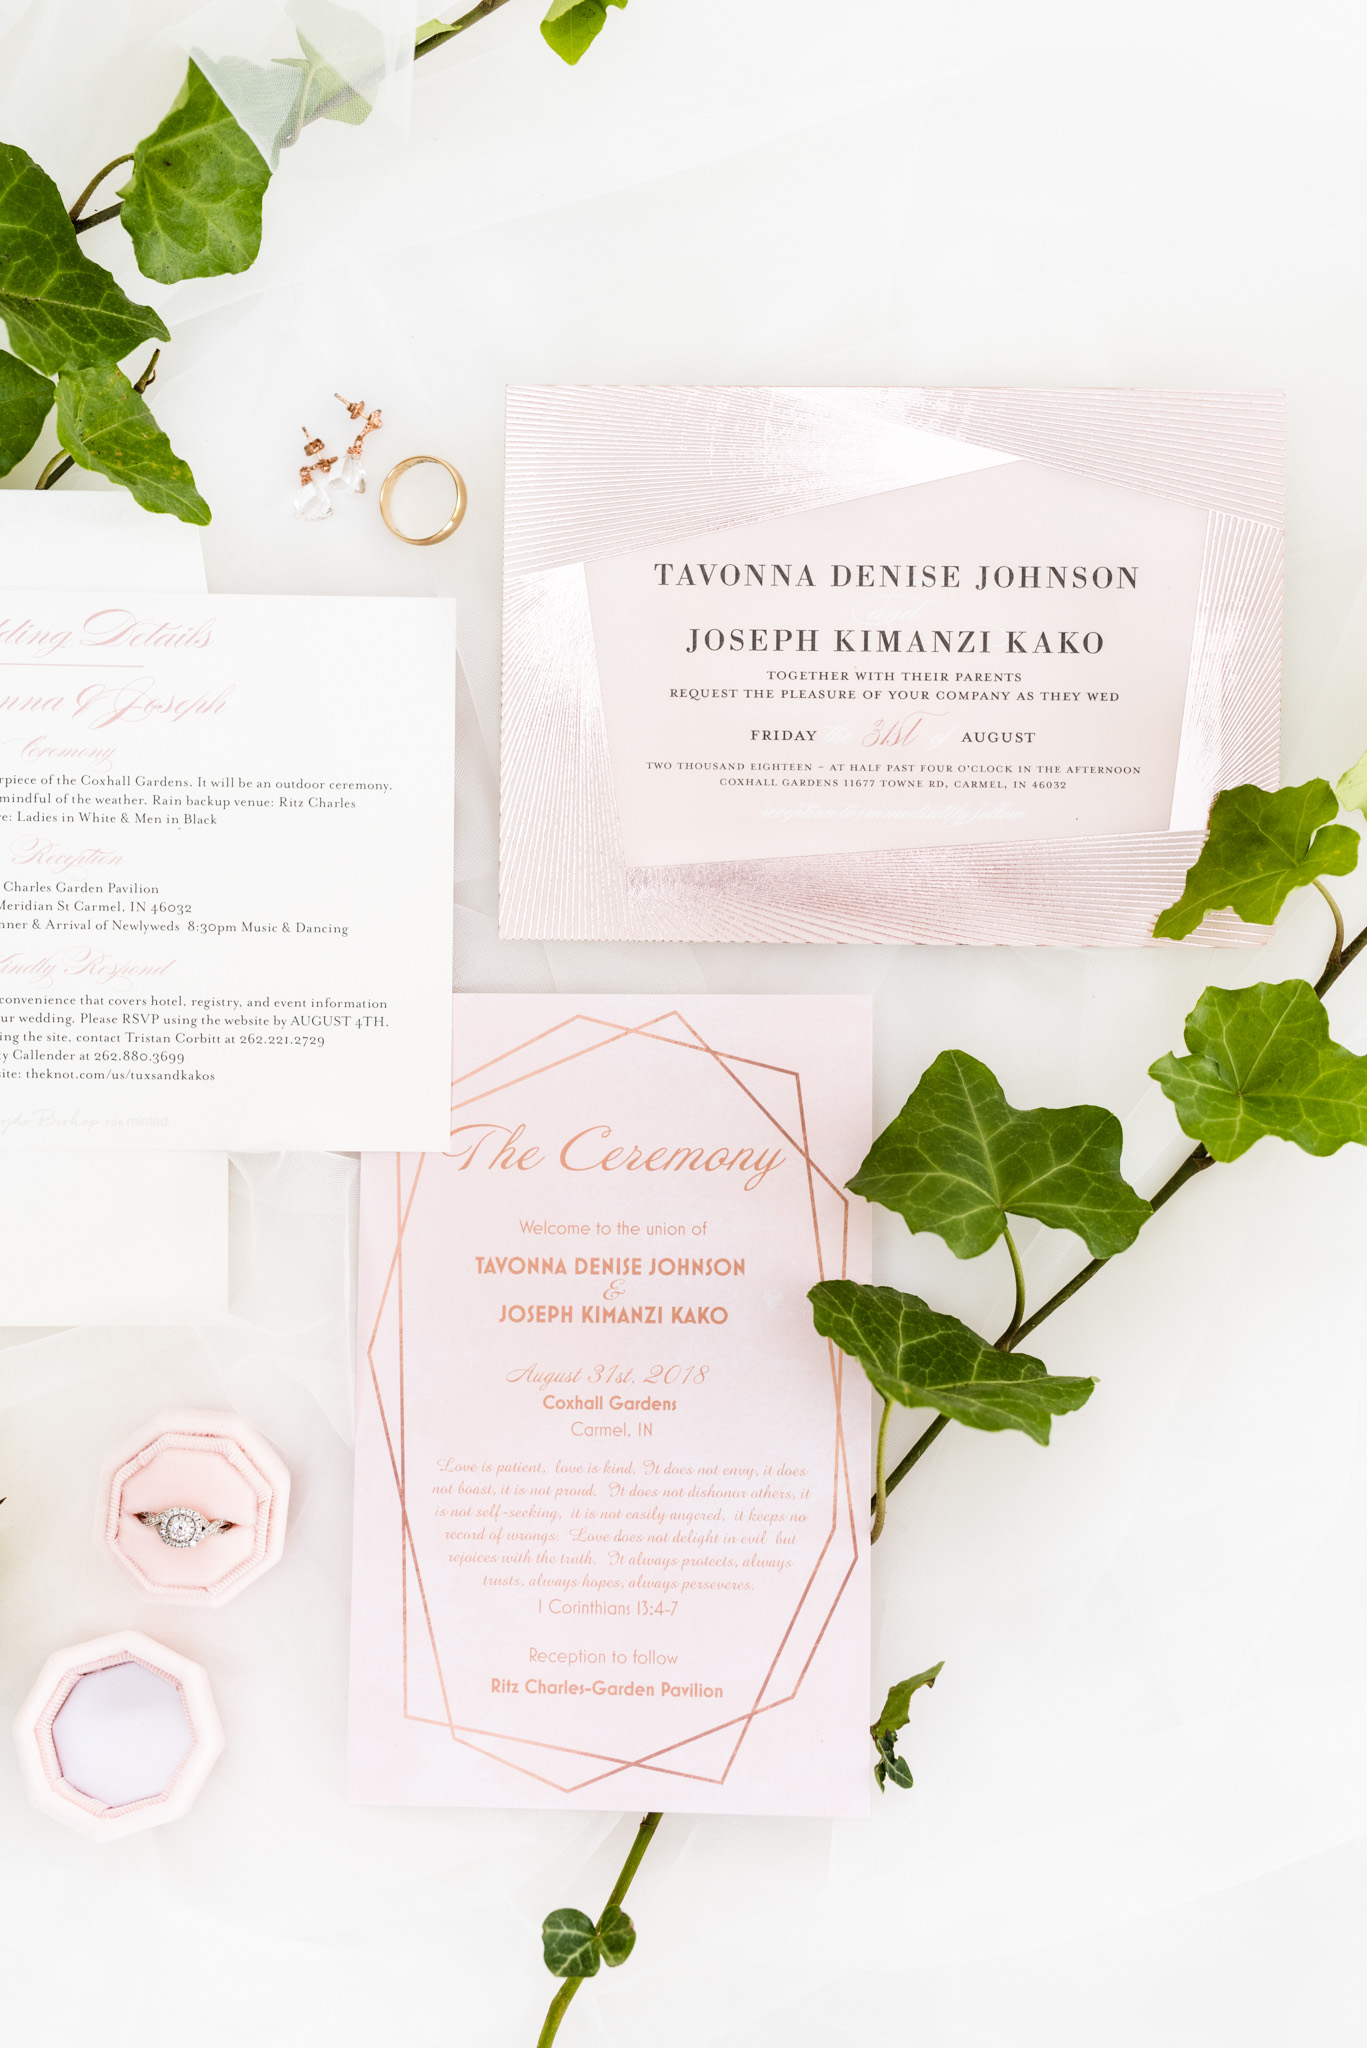 Wedding invitations sit on cloth.